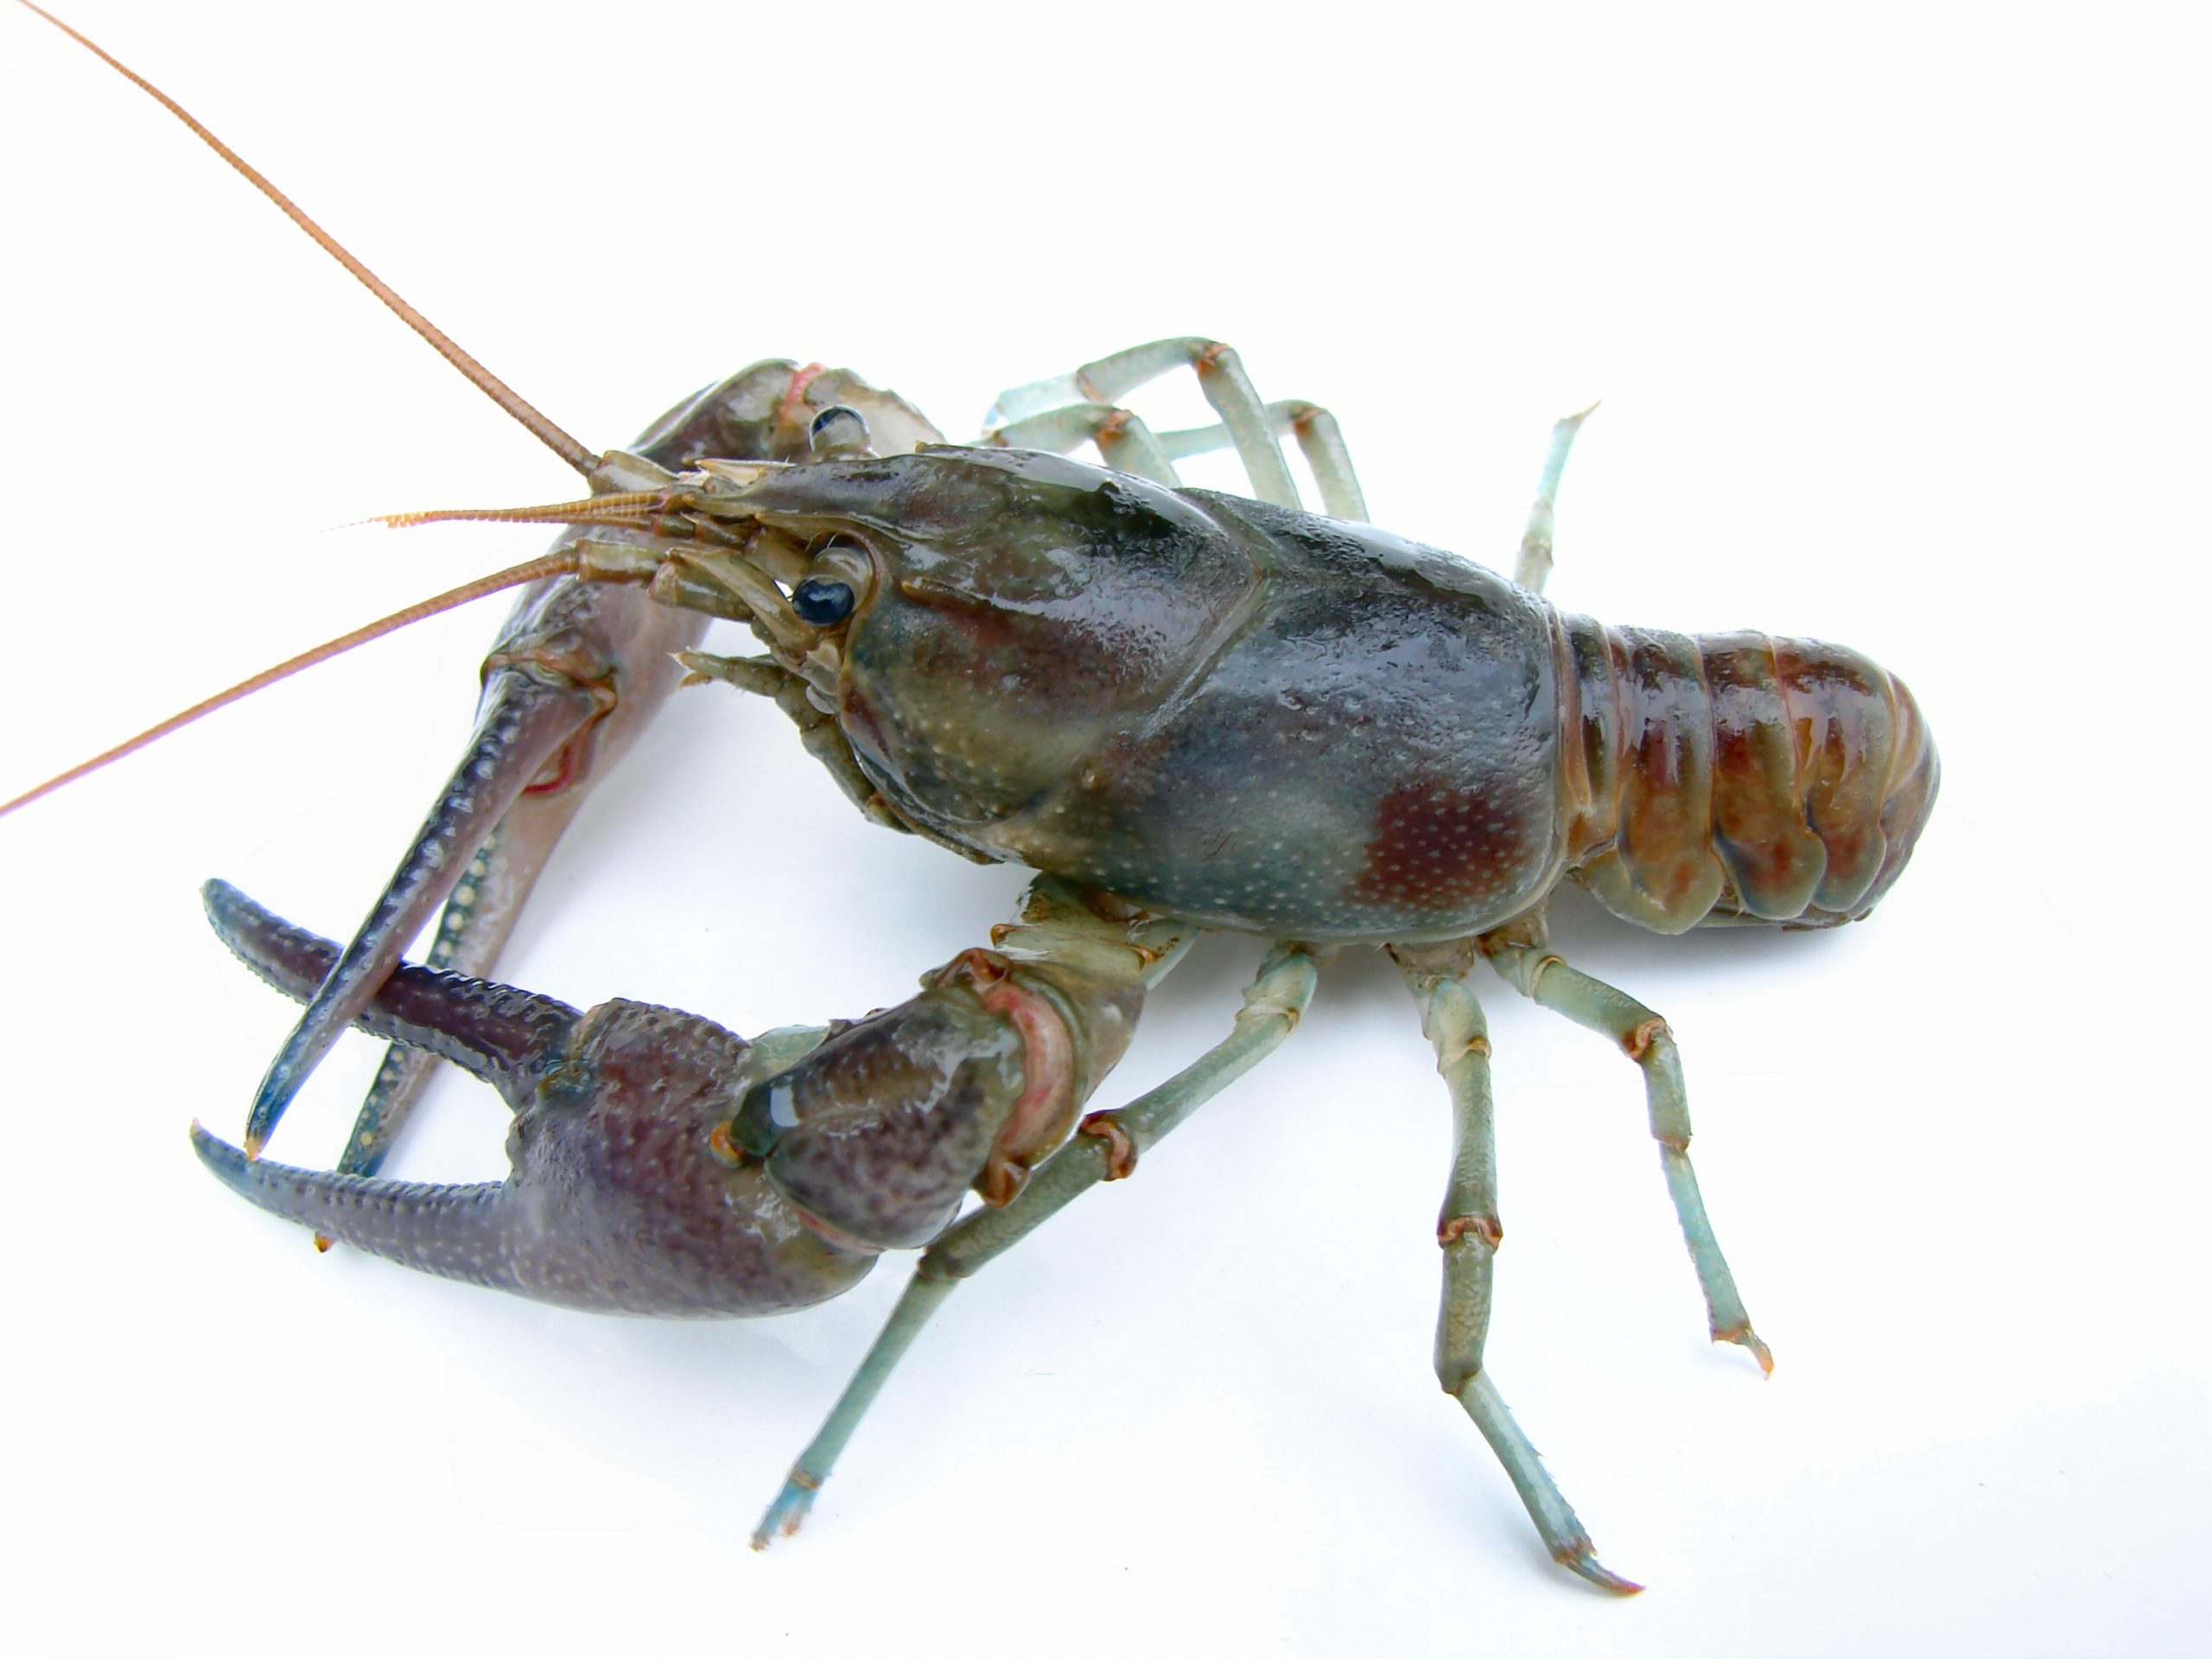 Crabdaddy, Rusty Crayfish, Crawdad Delicacy, Free Food? - Boundary Waters  Catalog Blog